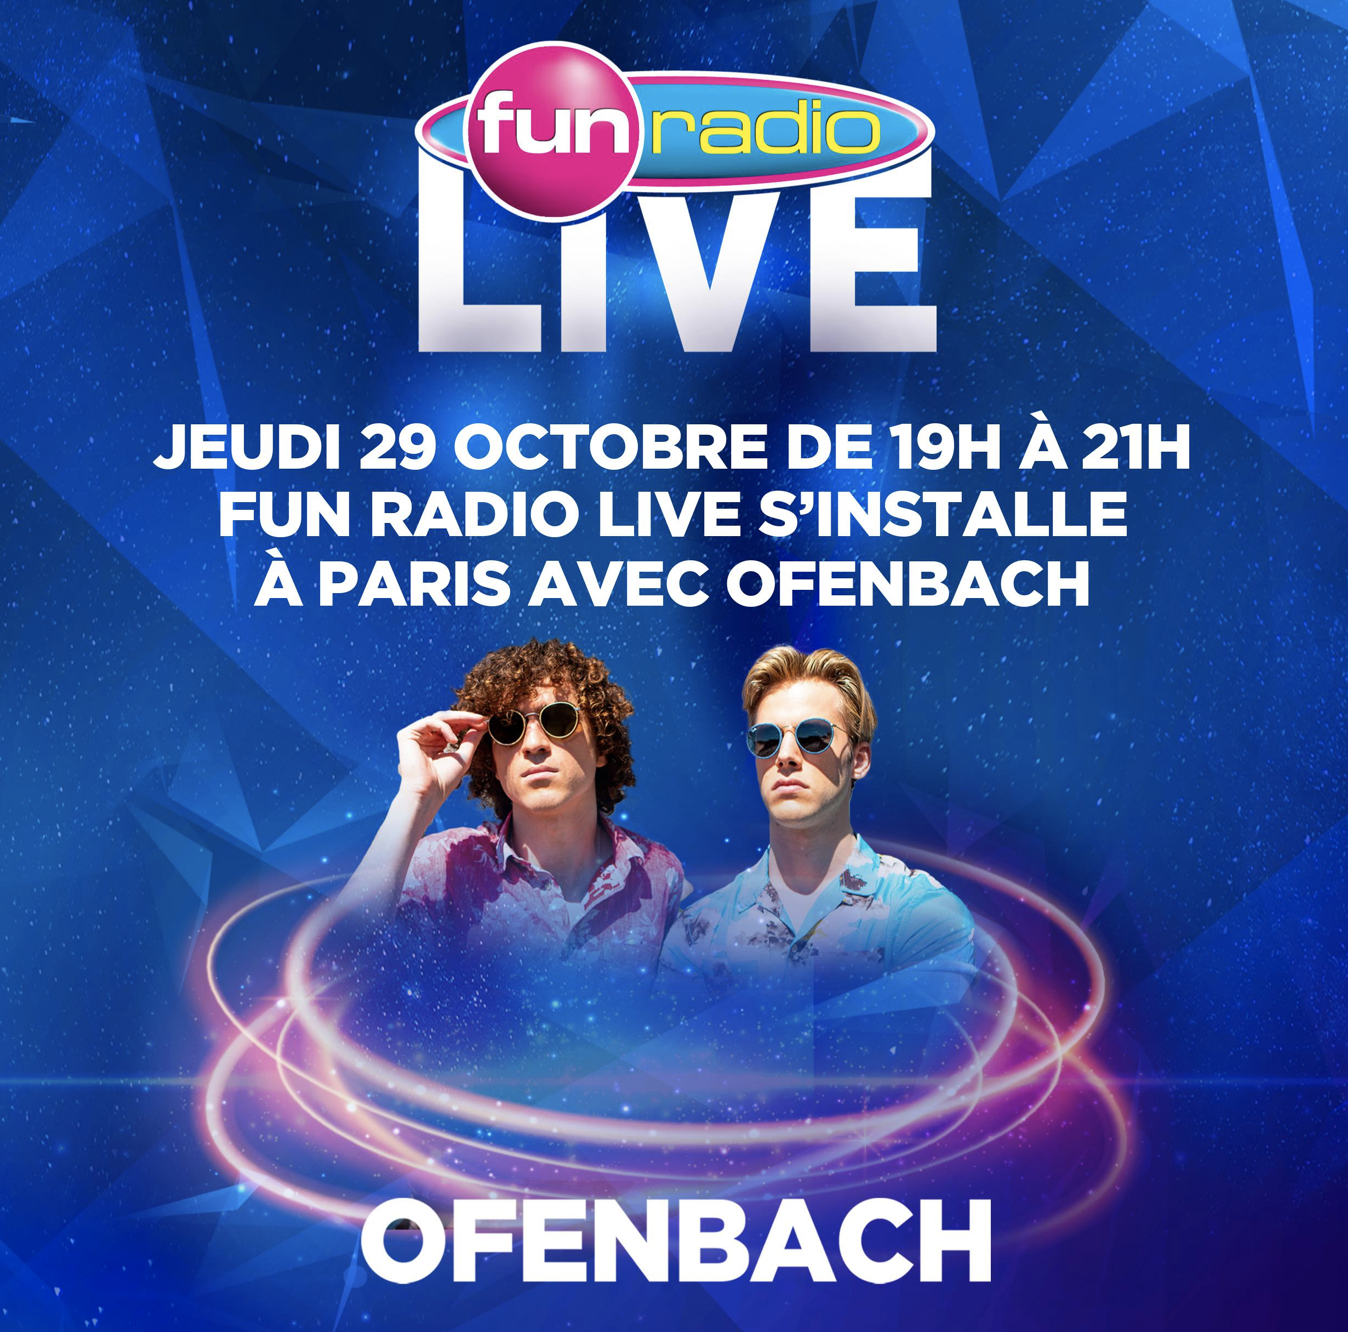 Fun Radio Live s'installe à Paris avec Ofenbach